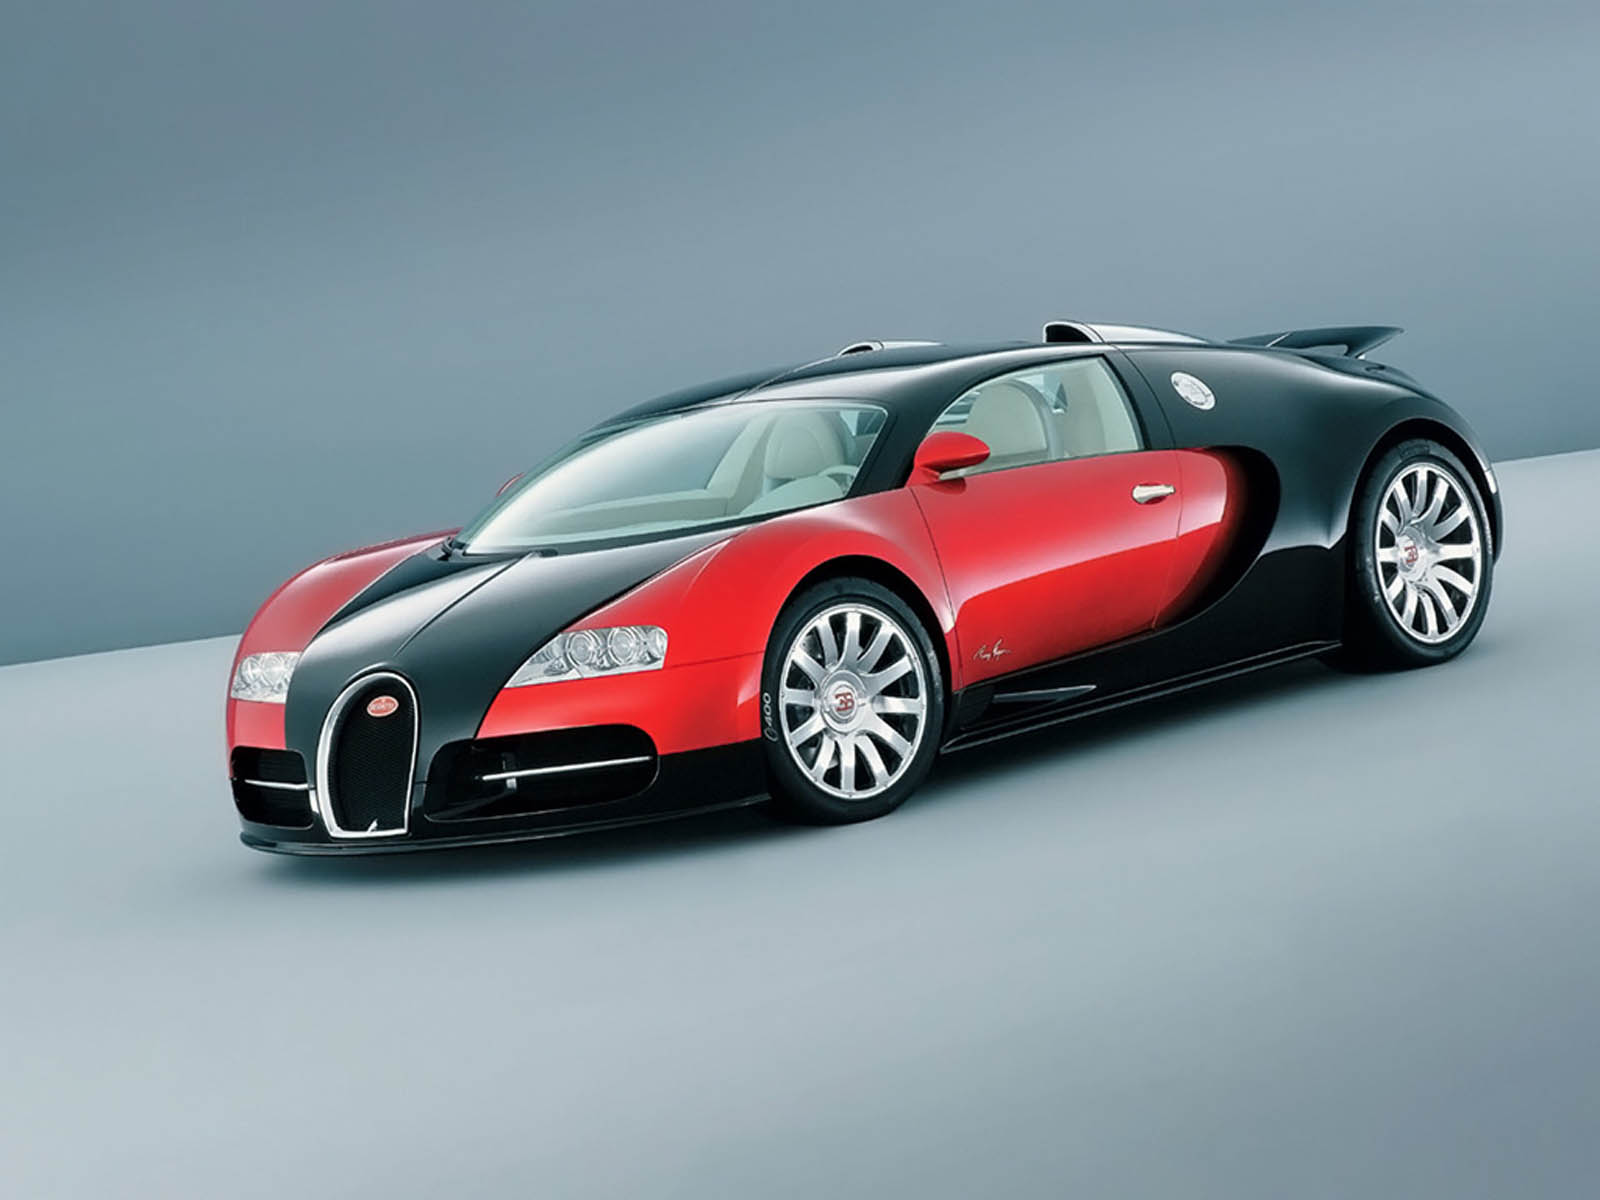 Bugatti Eb 18-4 Veyron Wallpapers